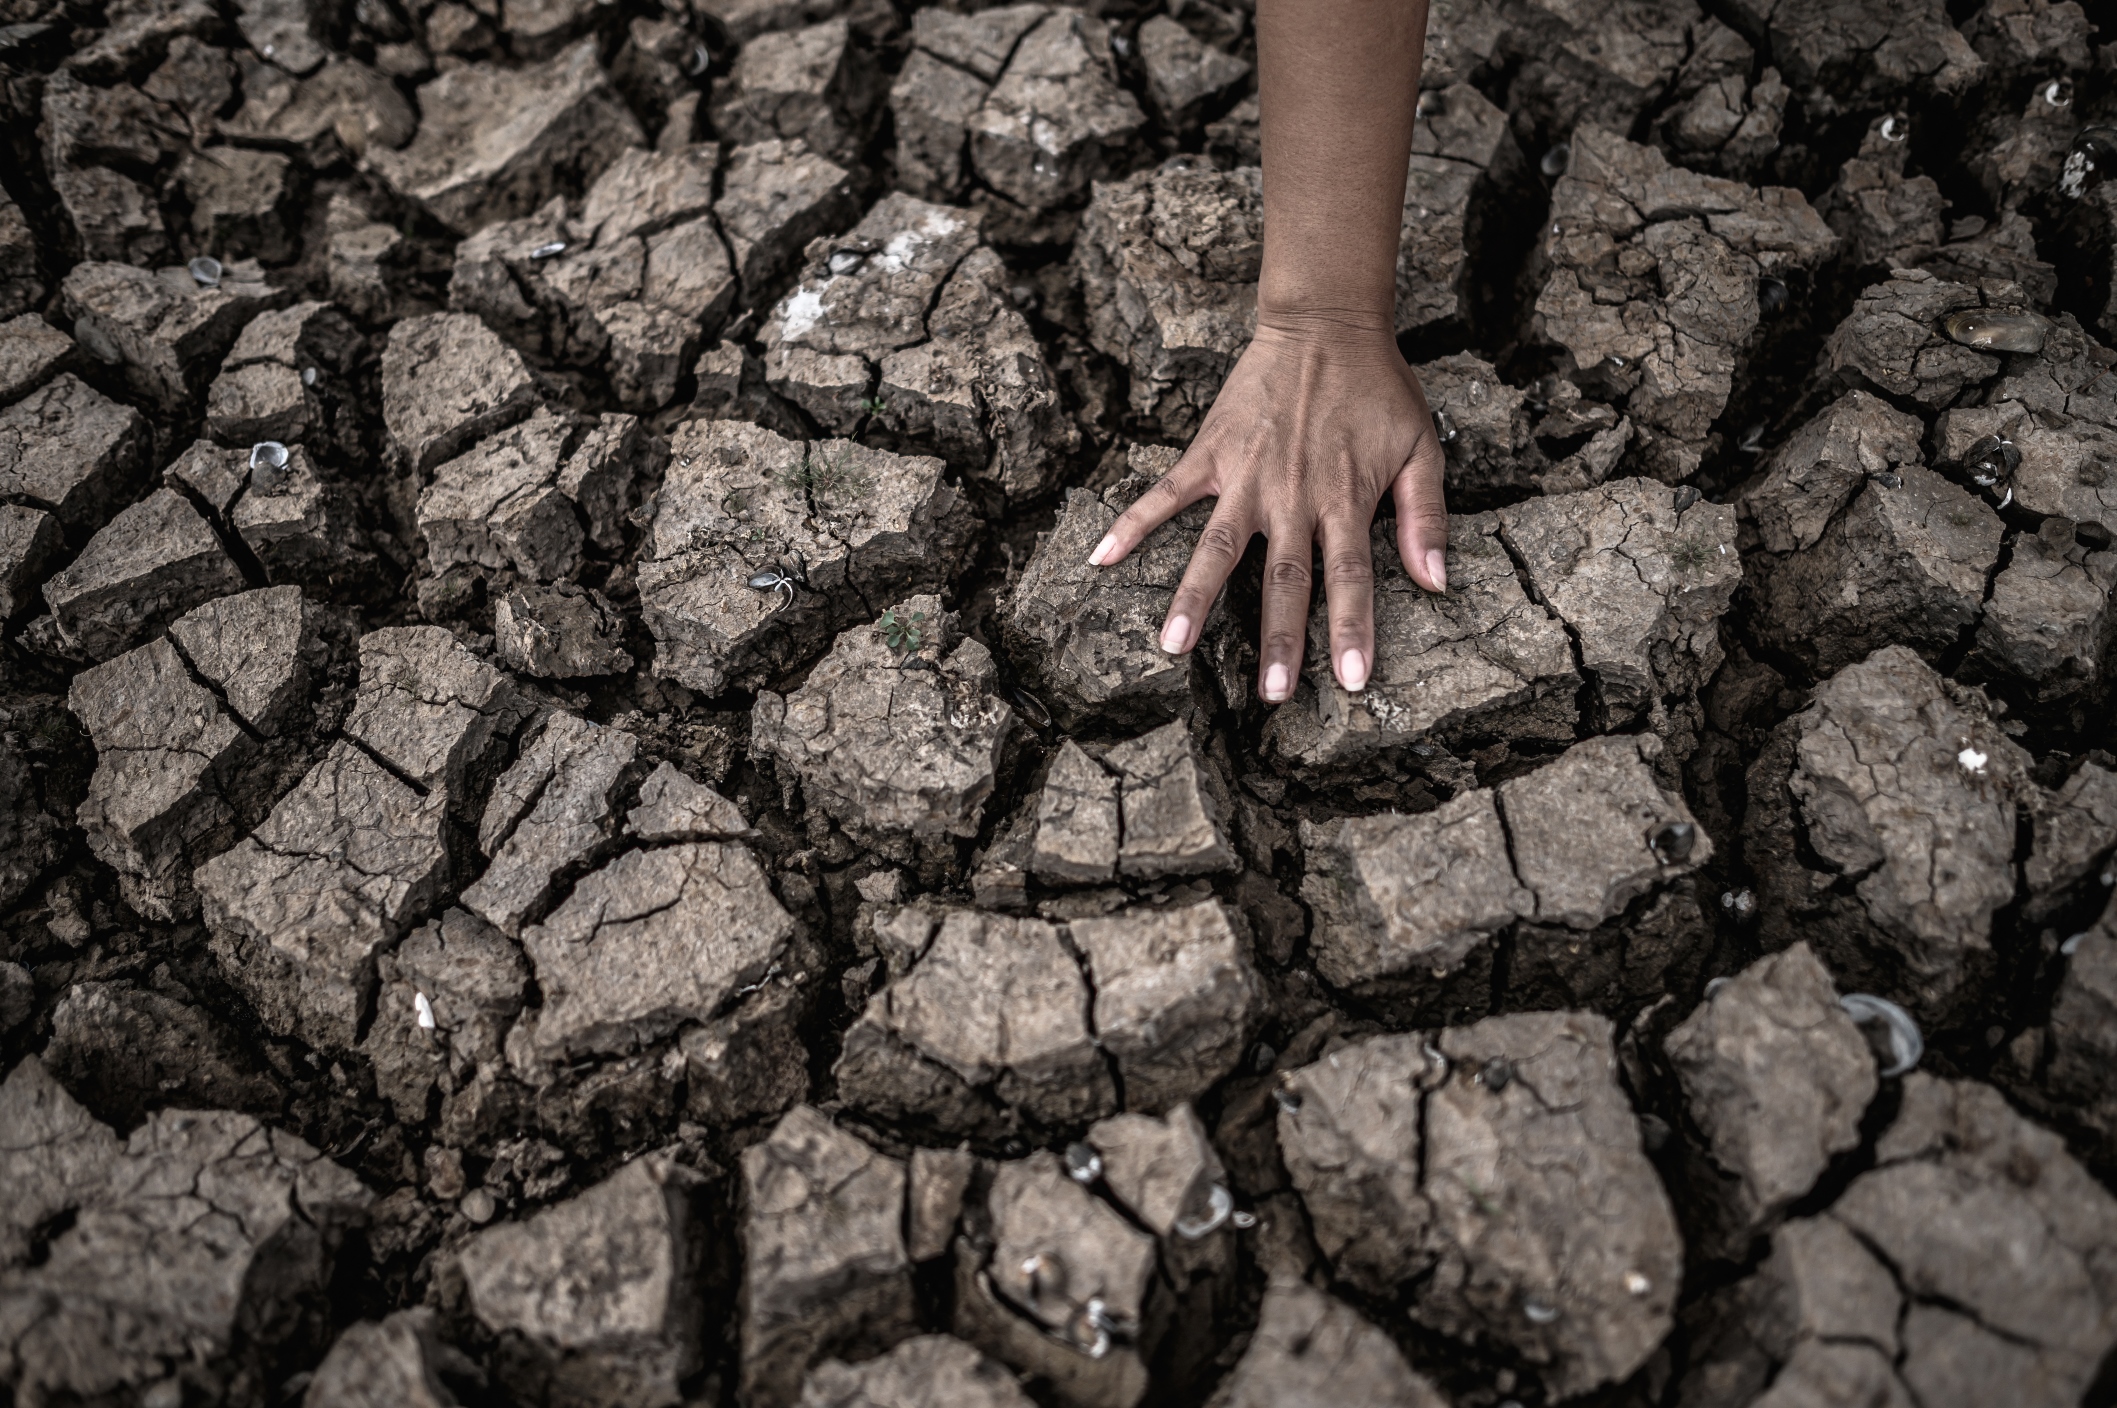 hands-dry-ground-global-warming-water-crisis.jpg